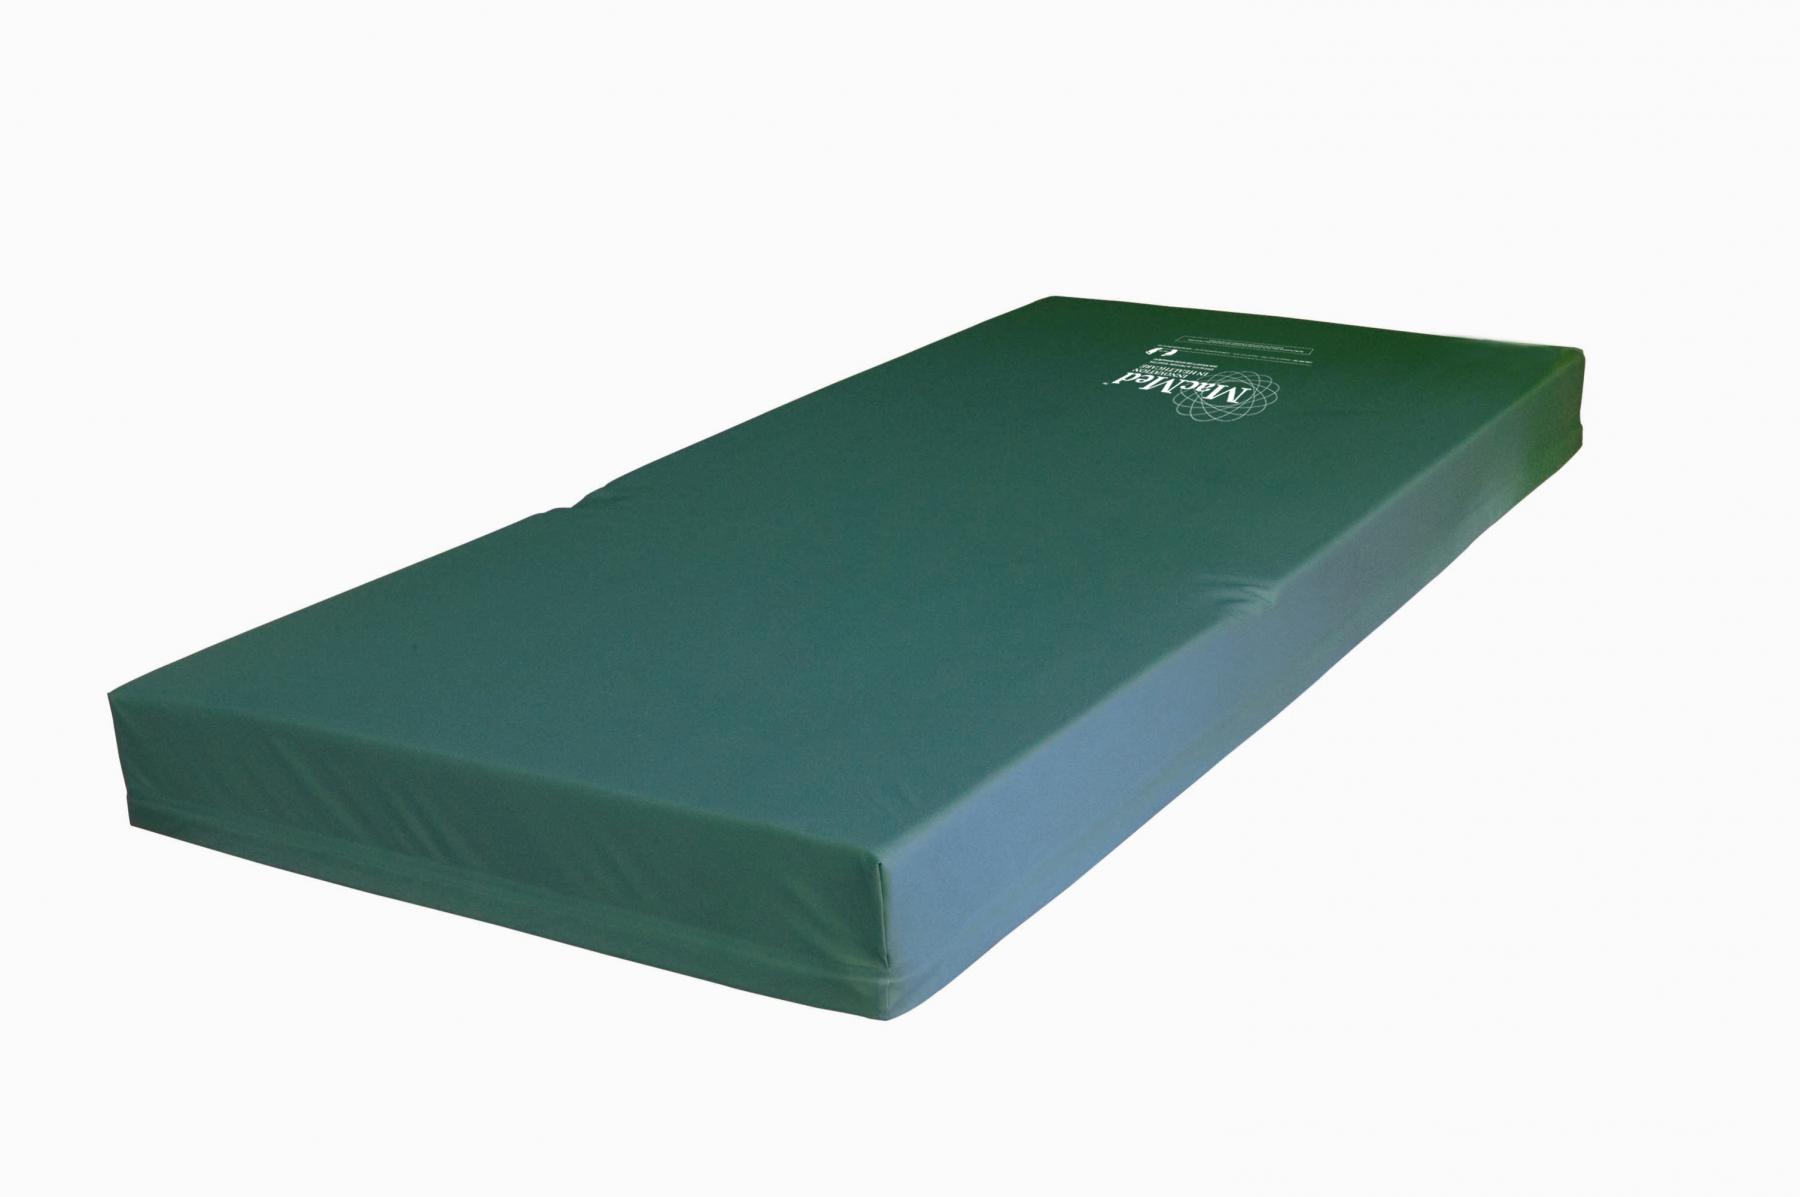 12 inch bariatric mattress